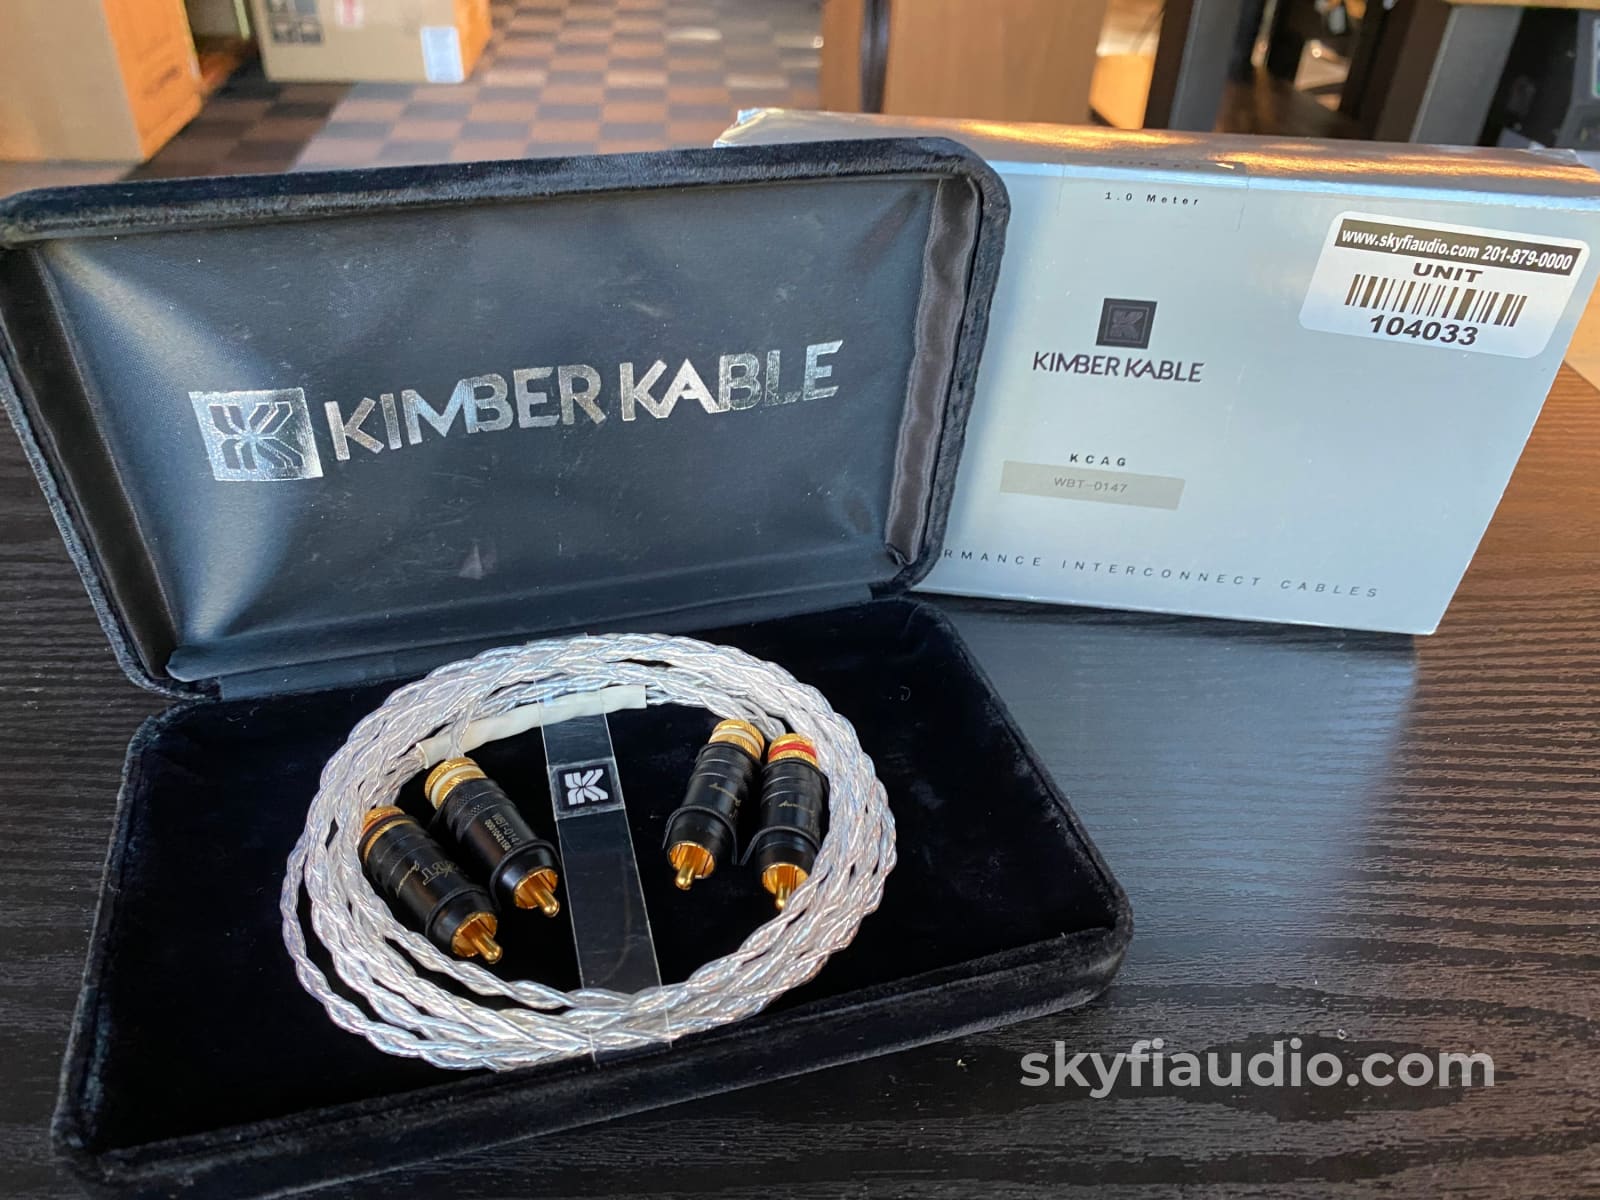 Kimber Kable Kcag Rca Interconnects With Wbt Connectors - 2 Meters Recftpkbzc4Fmdjzk